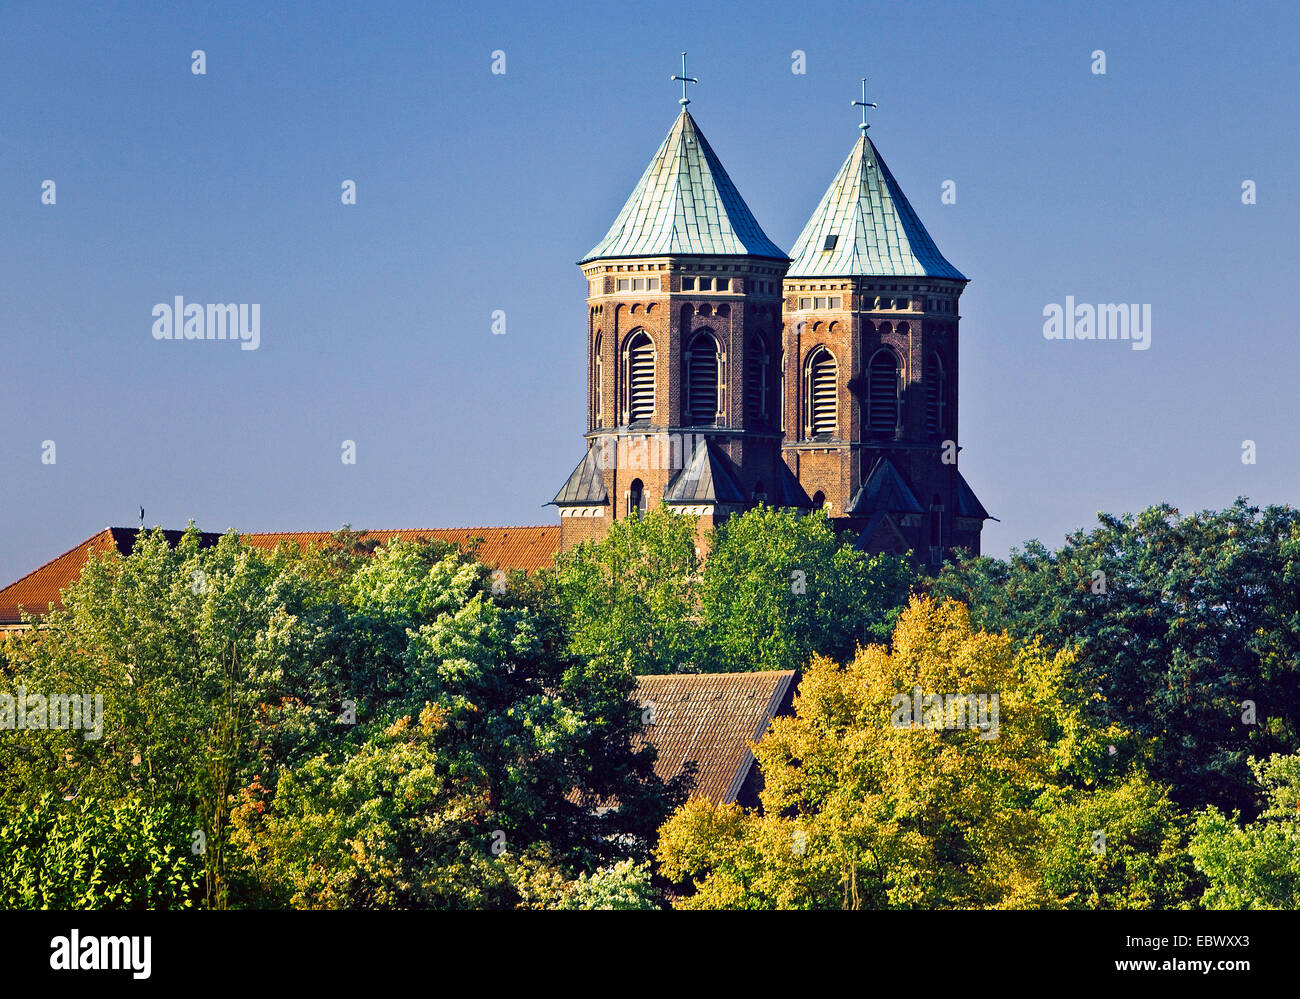 steeples of catholic church Sr mariae Himmelfahrt in Altendorf, Germany, North Rhine-Westphalia, Ruhr Area, Essen Stock Photo